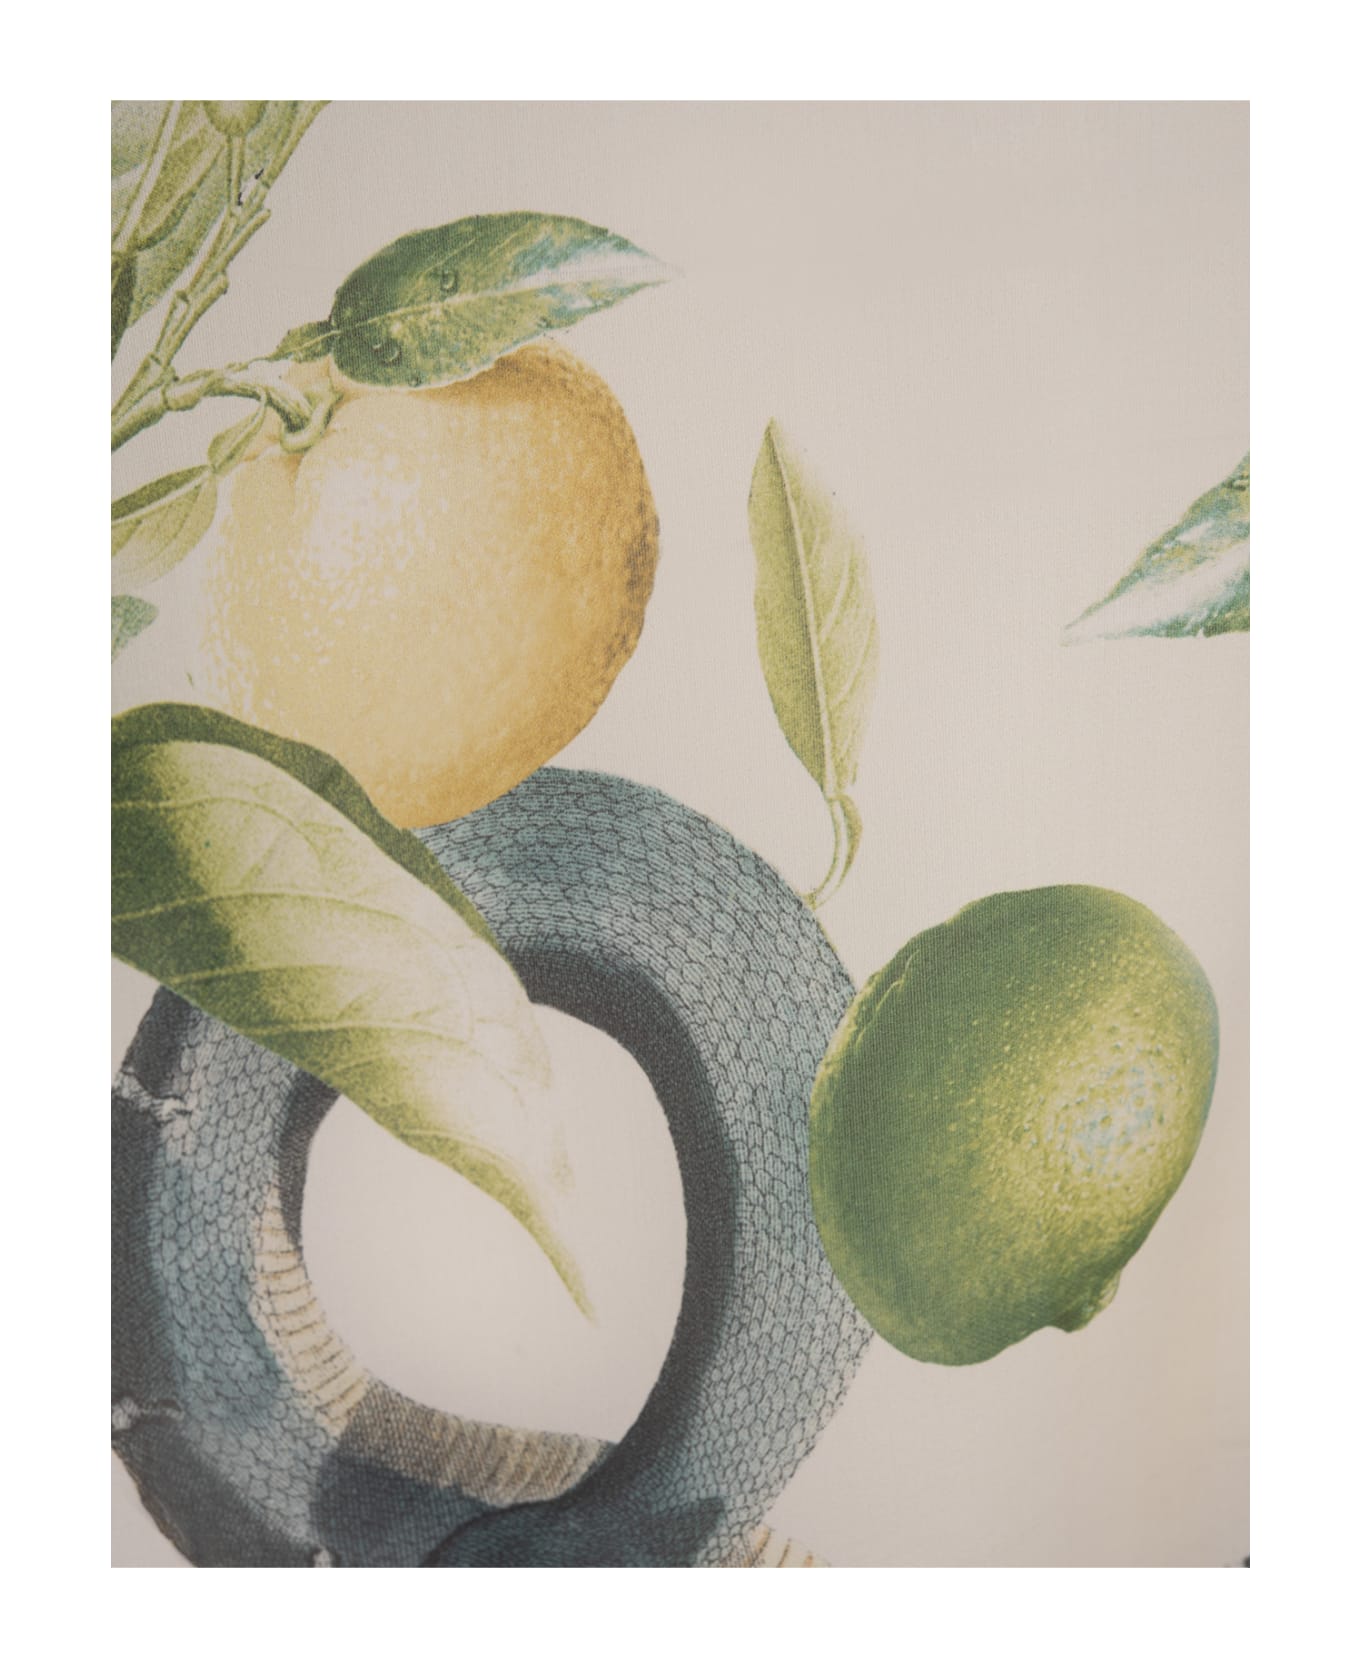 Roberto Cavalli Ivory Shirt With Lemons Print - Multicolor ブラウス